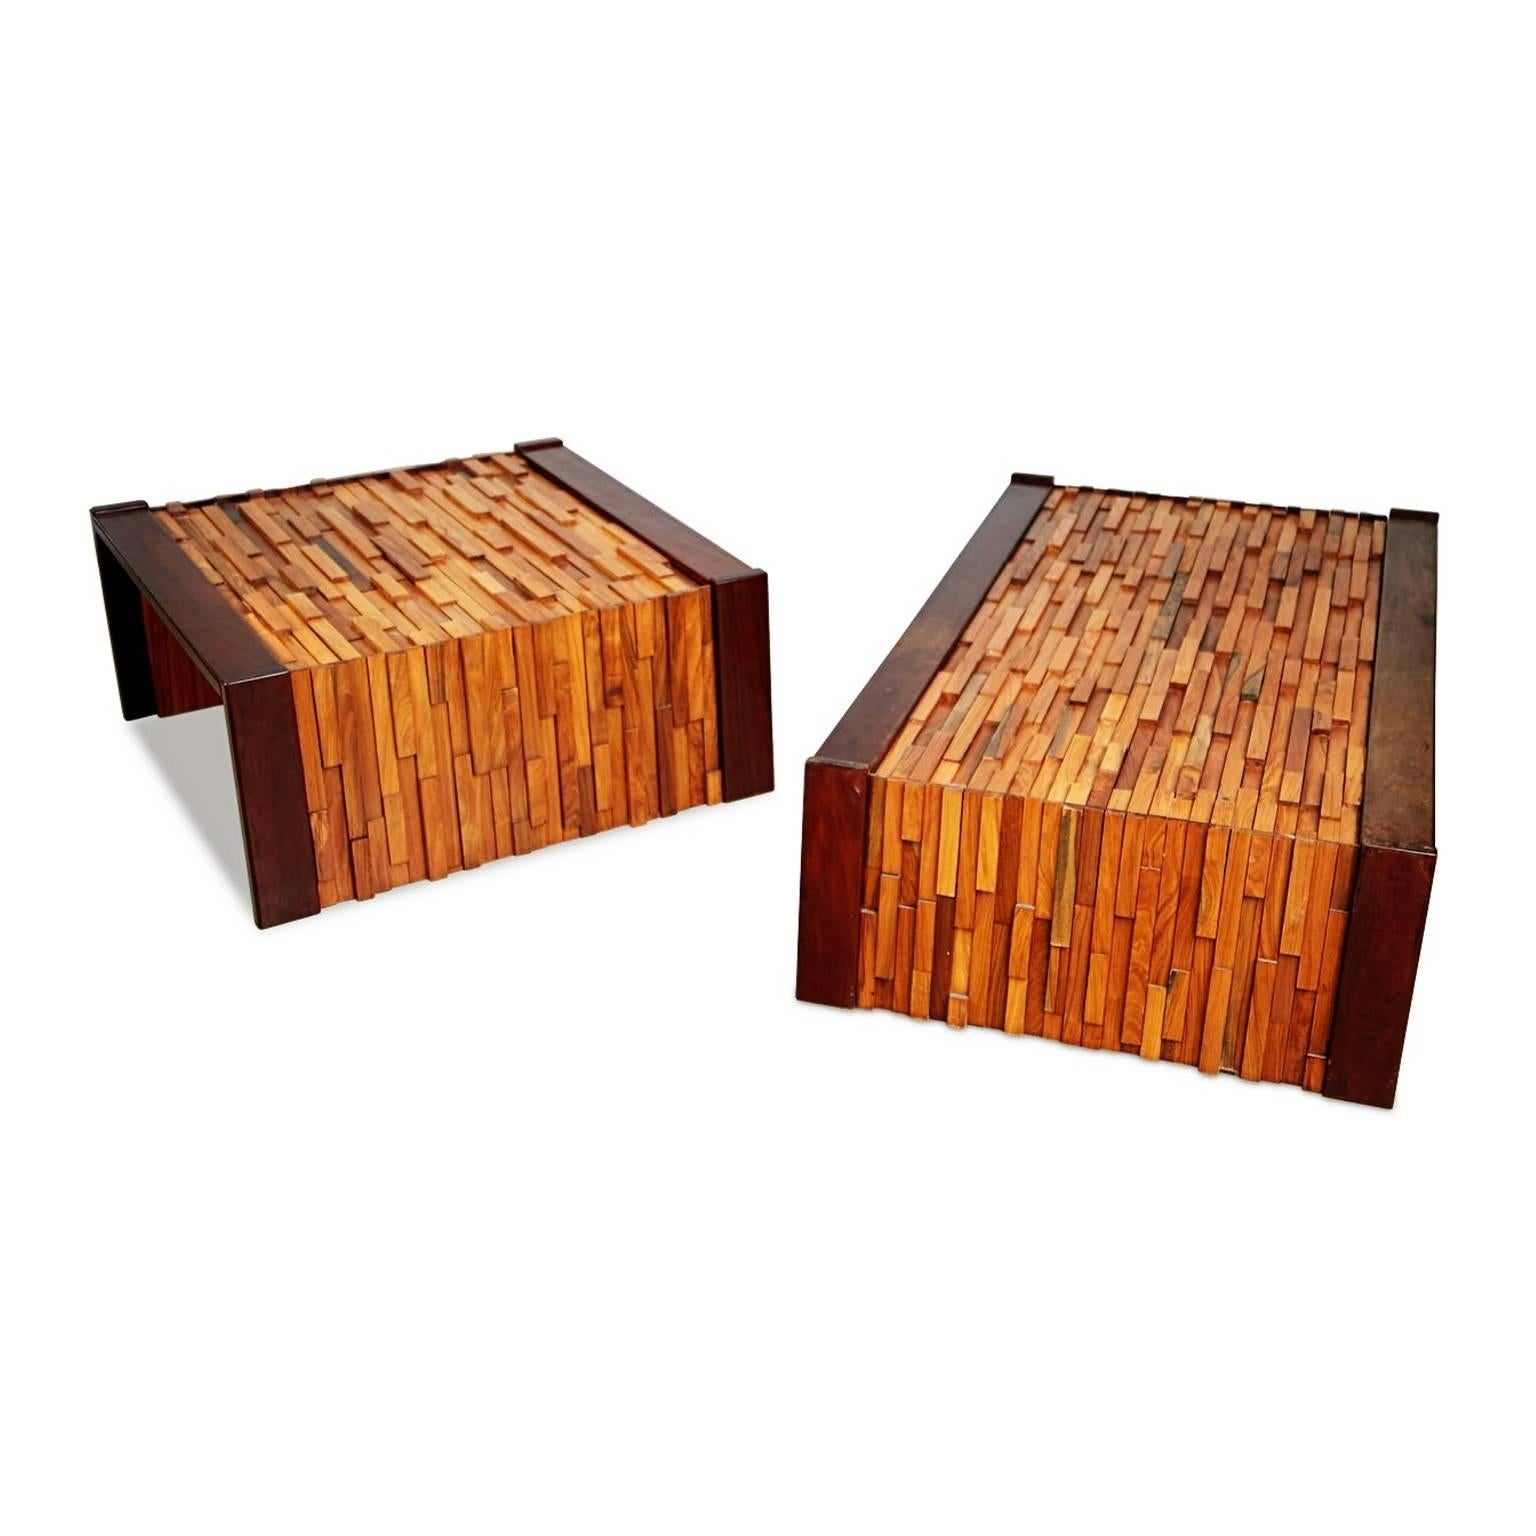 Jacaranda Percival Lafer Exotic Wood Long Coffee Table for L'atelier De Sao Paulo, Brazil